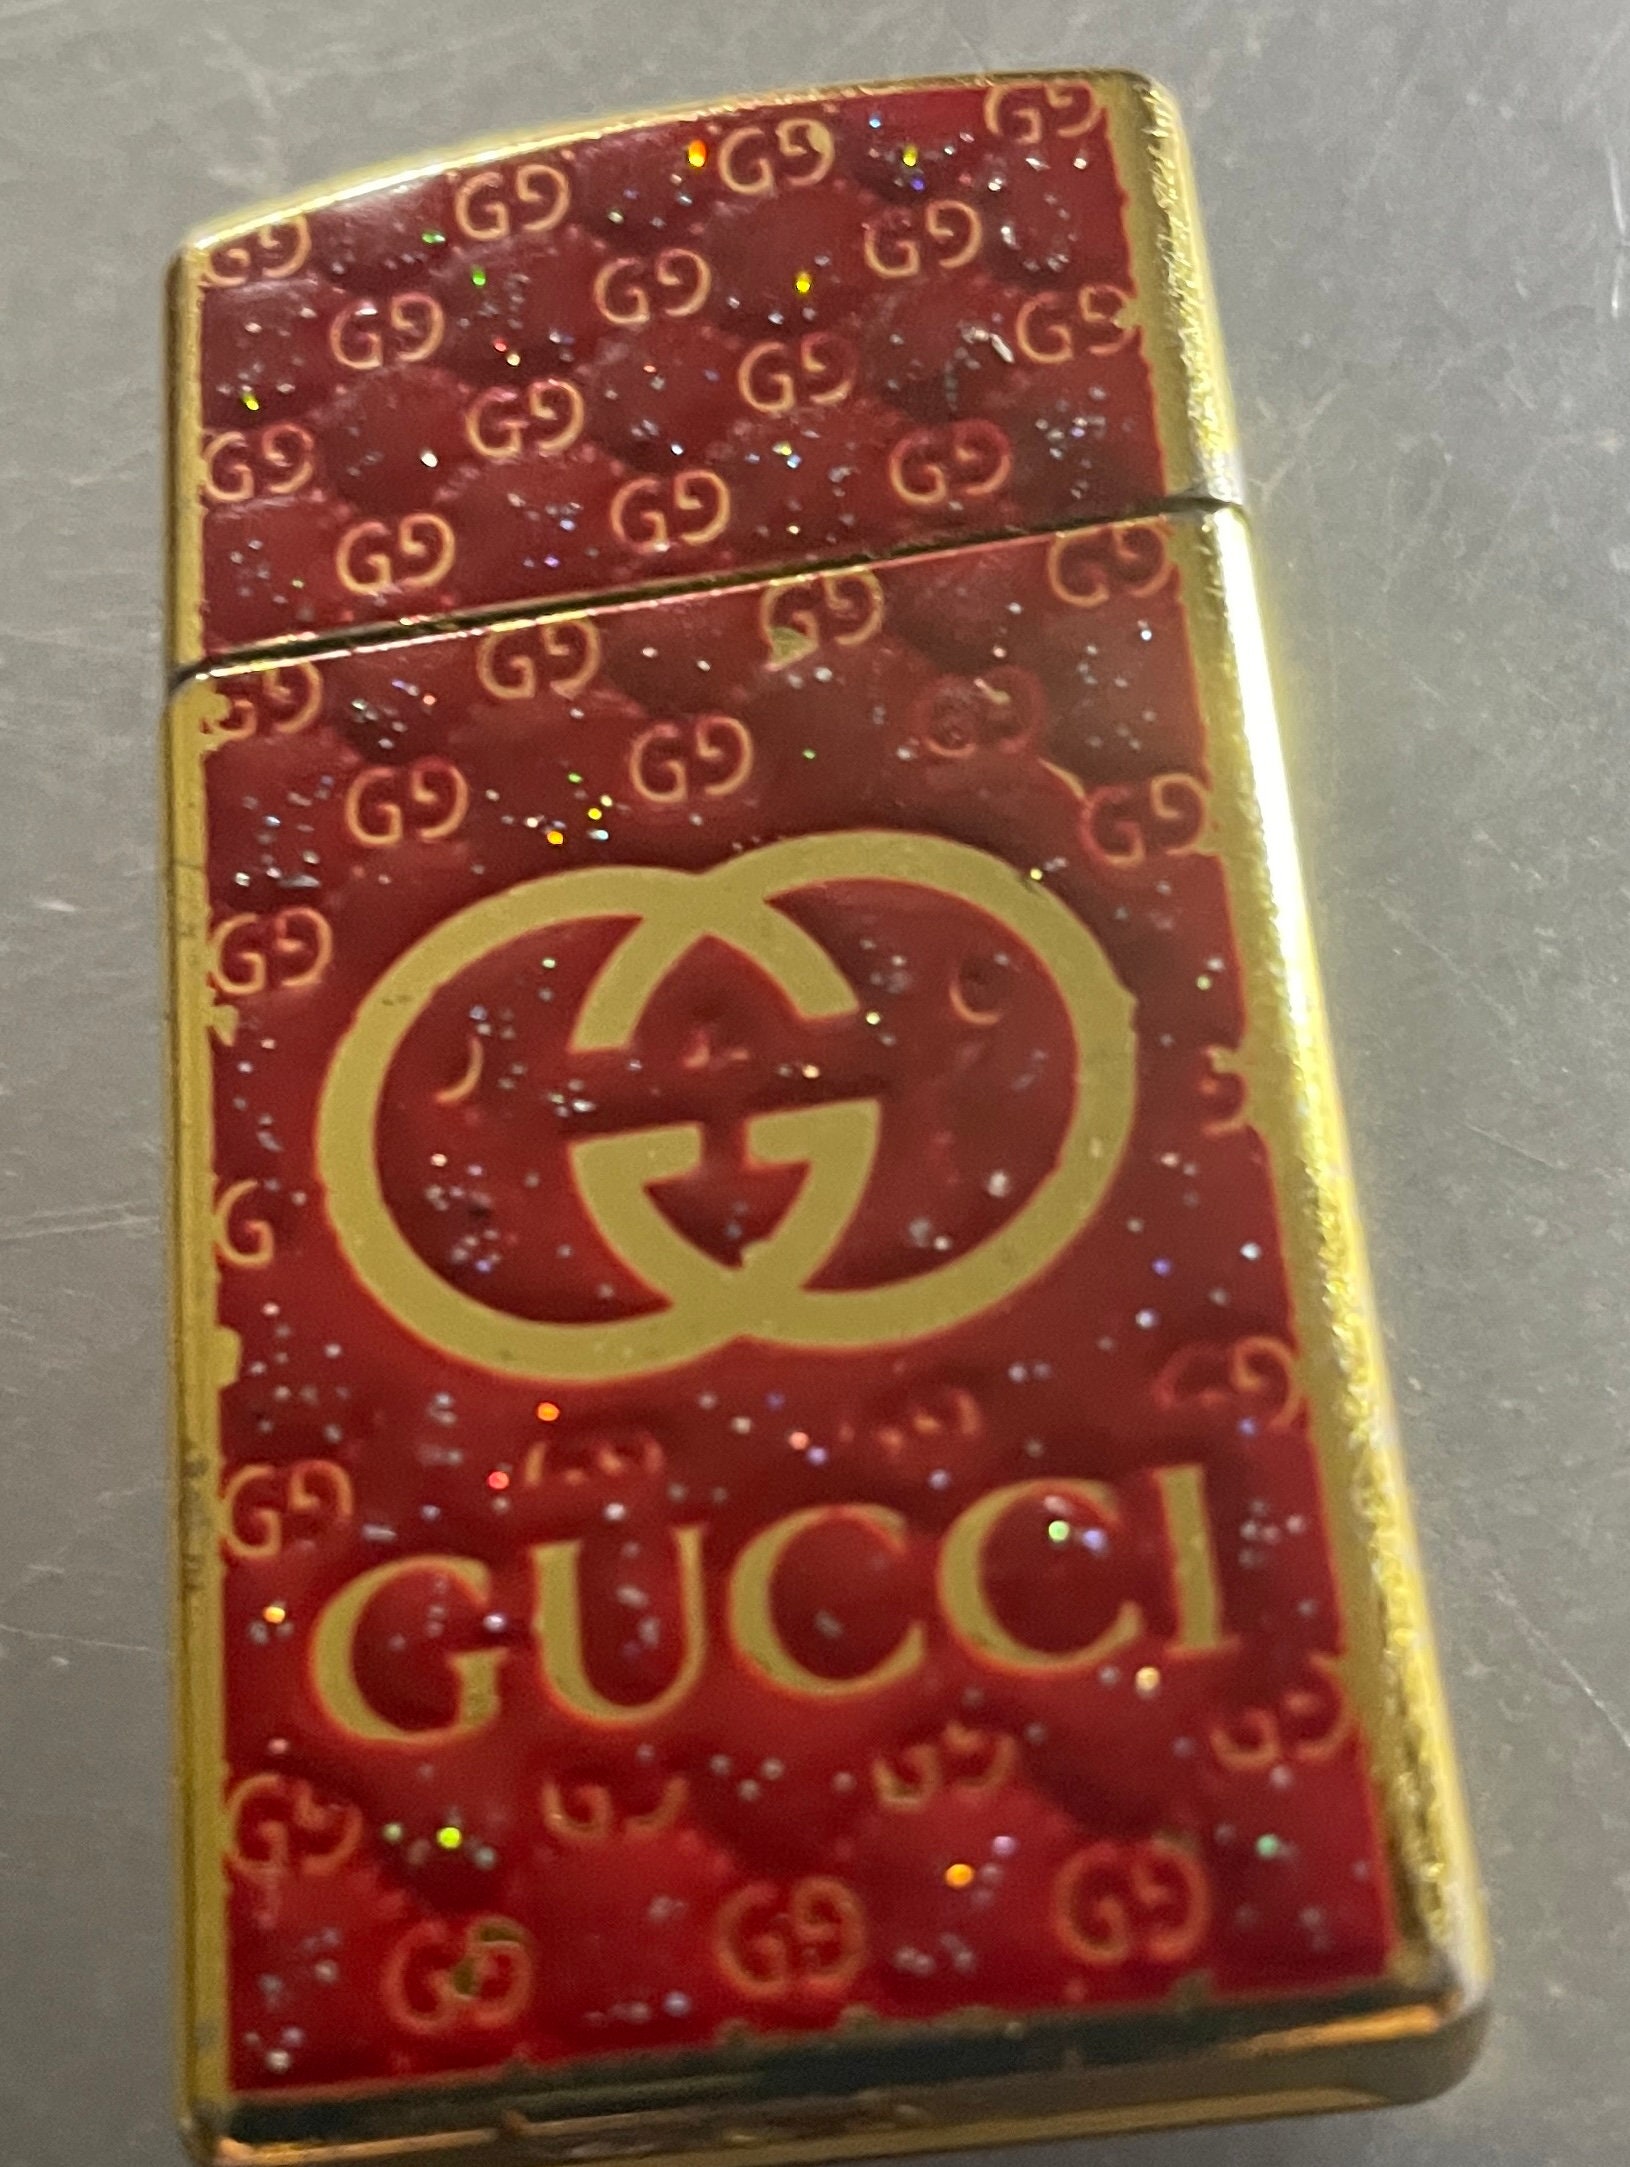 Gucci Lighter 